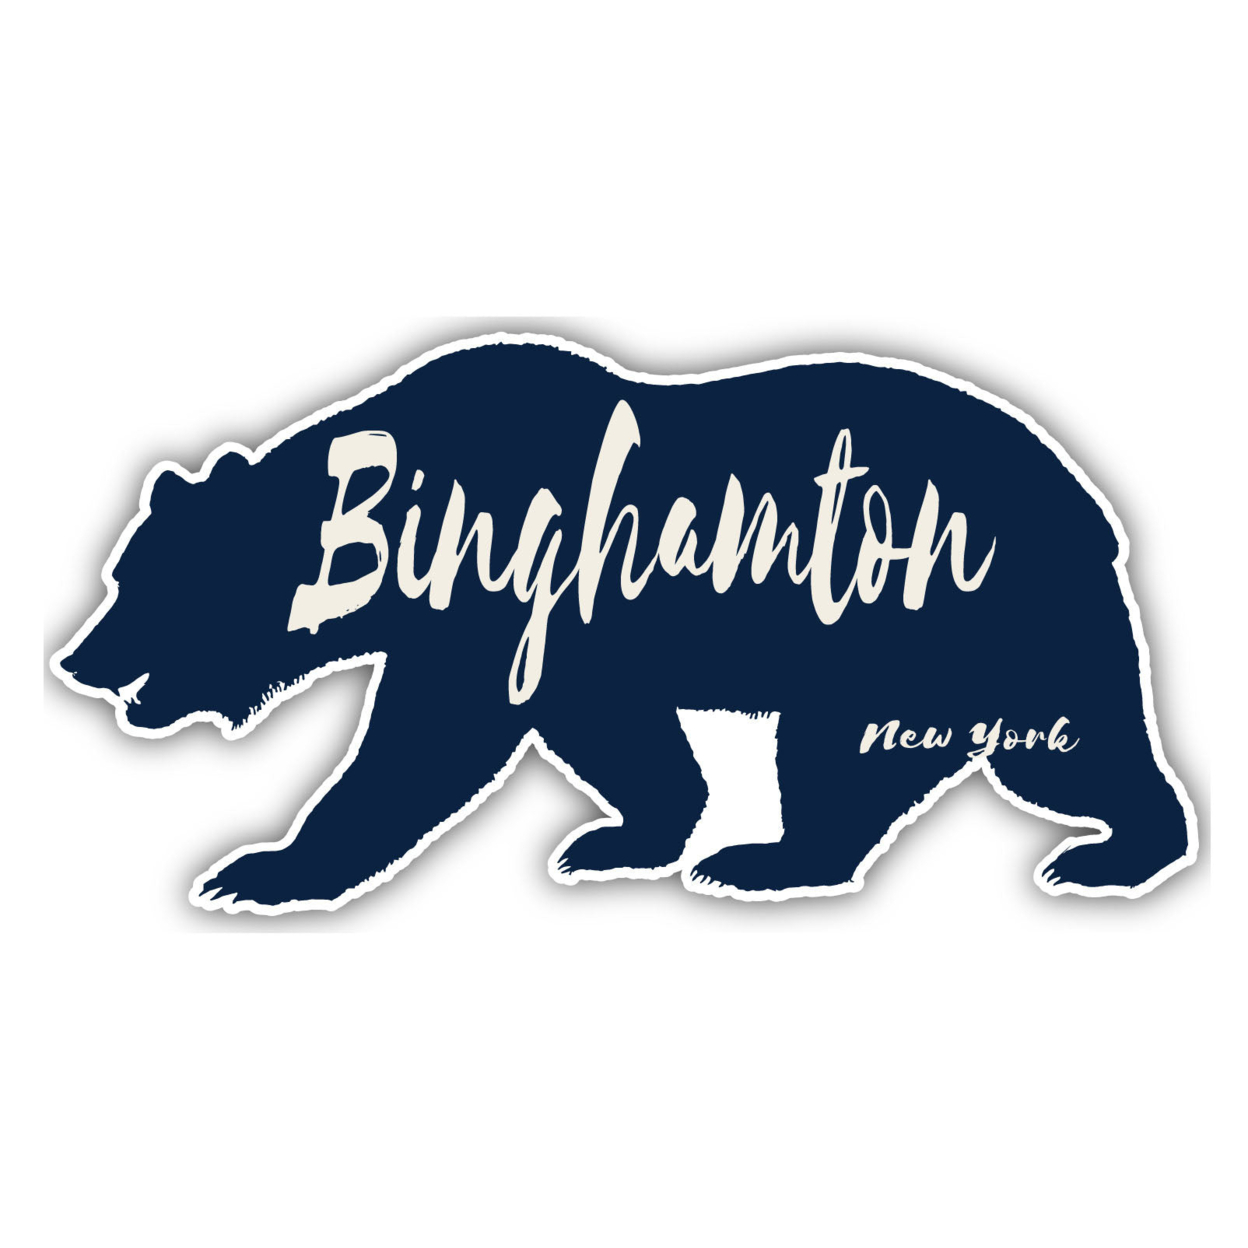 Binghamton New York Souvenir Decorative Stickers (Choose Theme And Size) - 4-Pack, 10-Inch, Bear